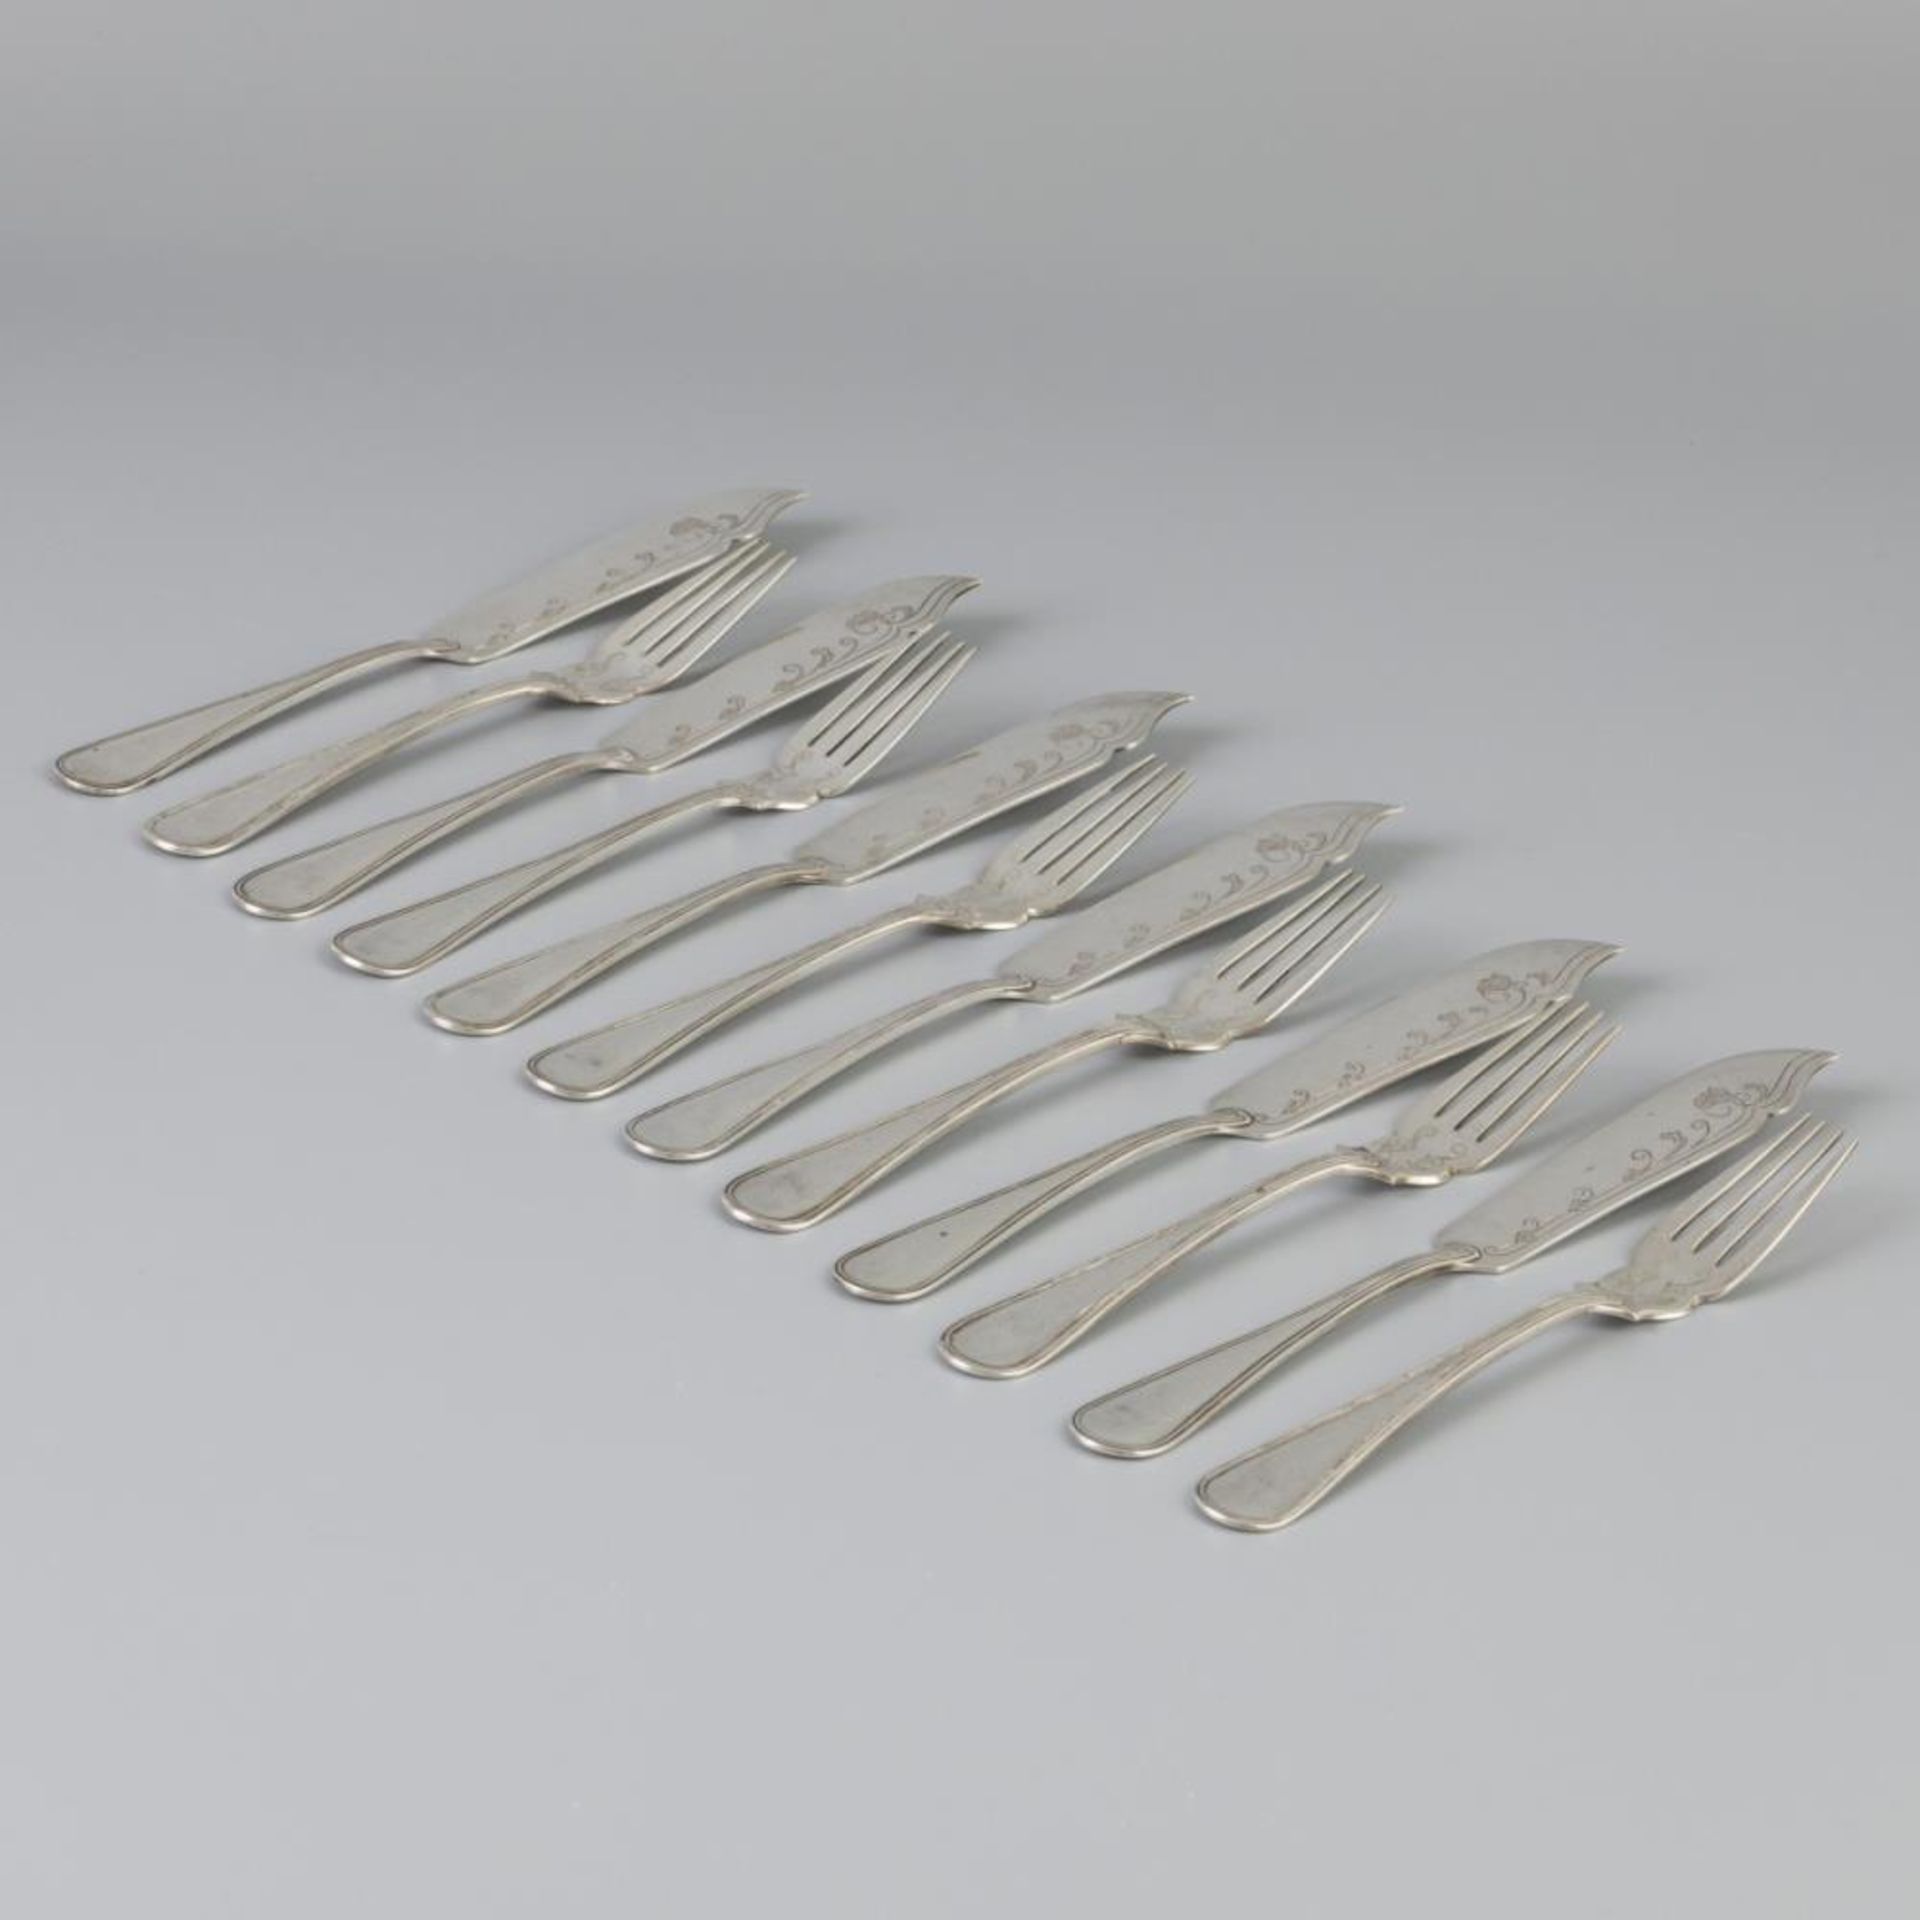 12 piece silver fish cutlery set.